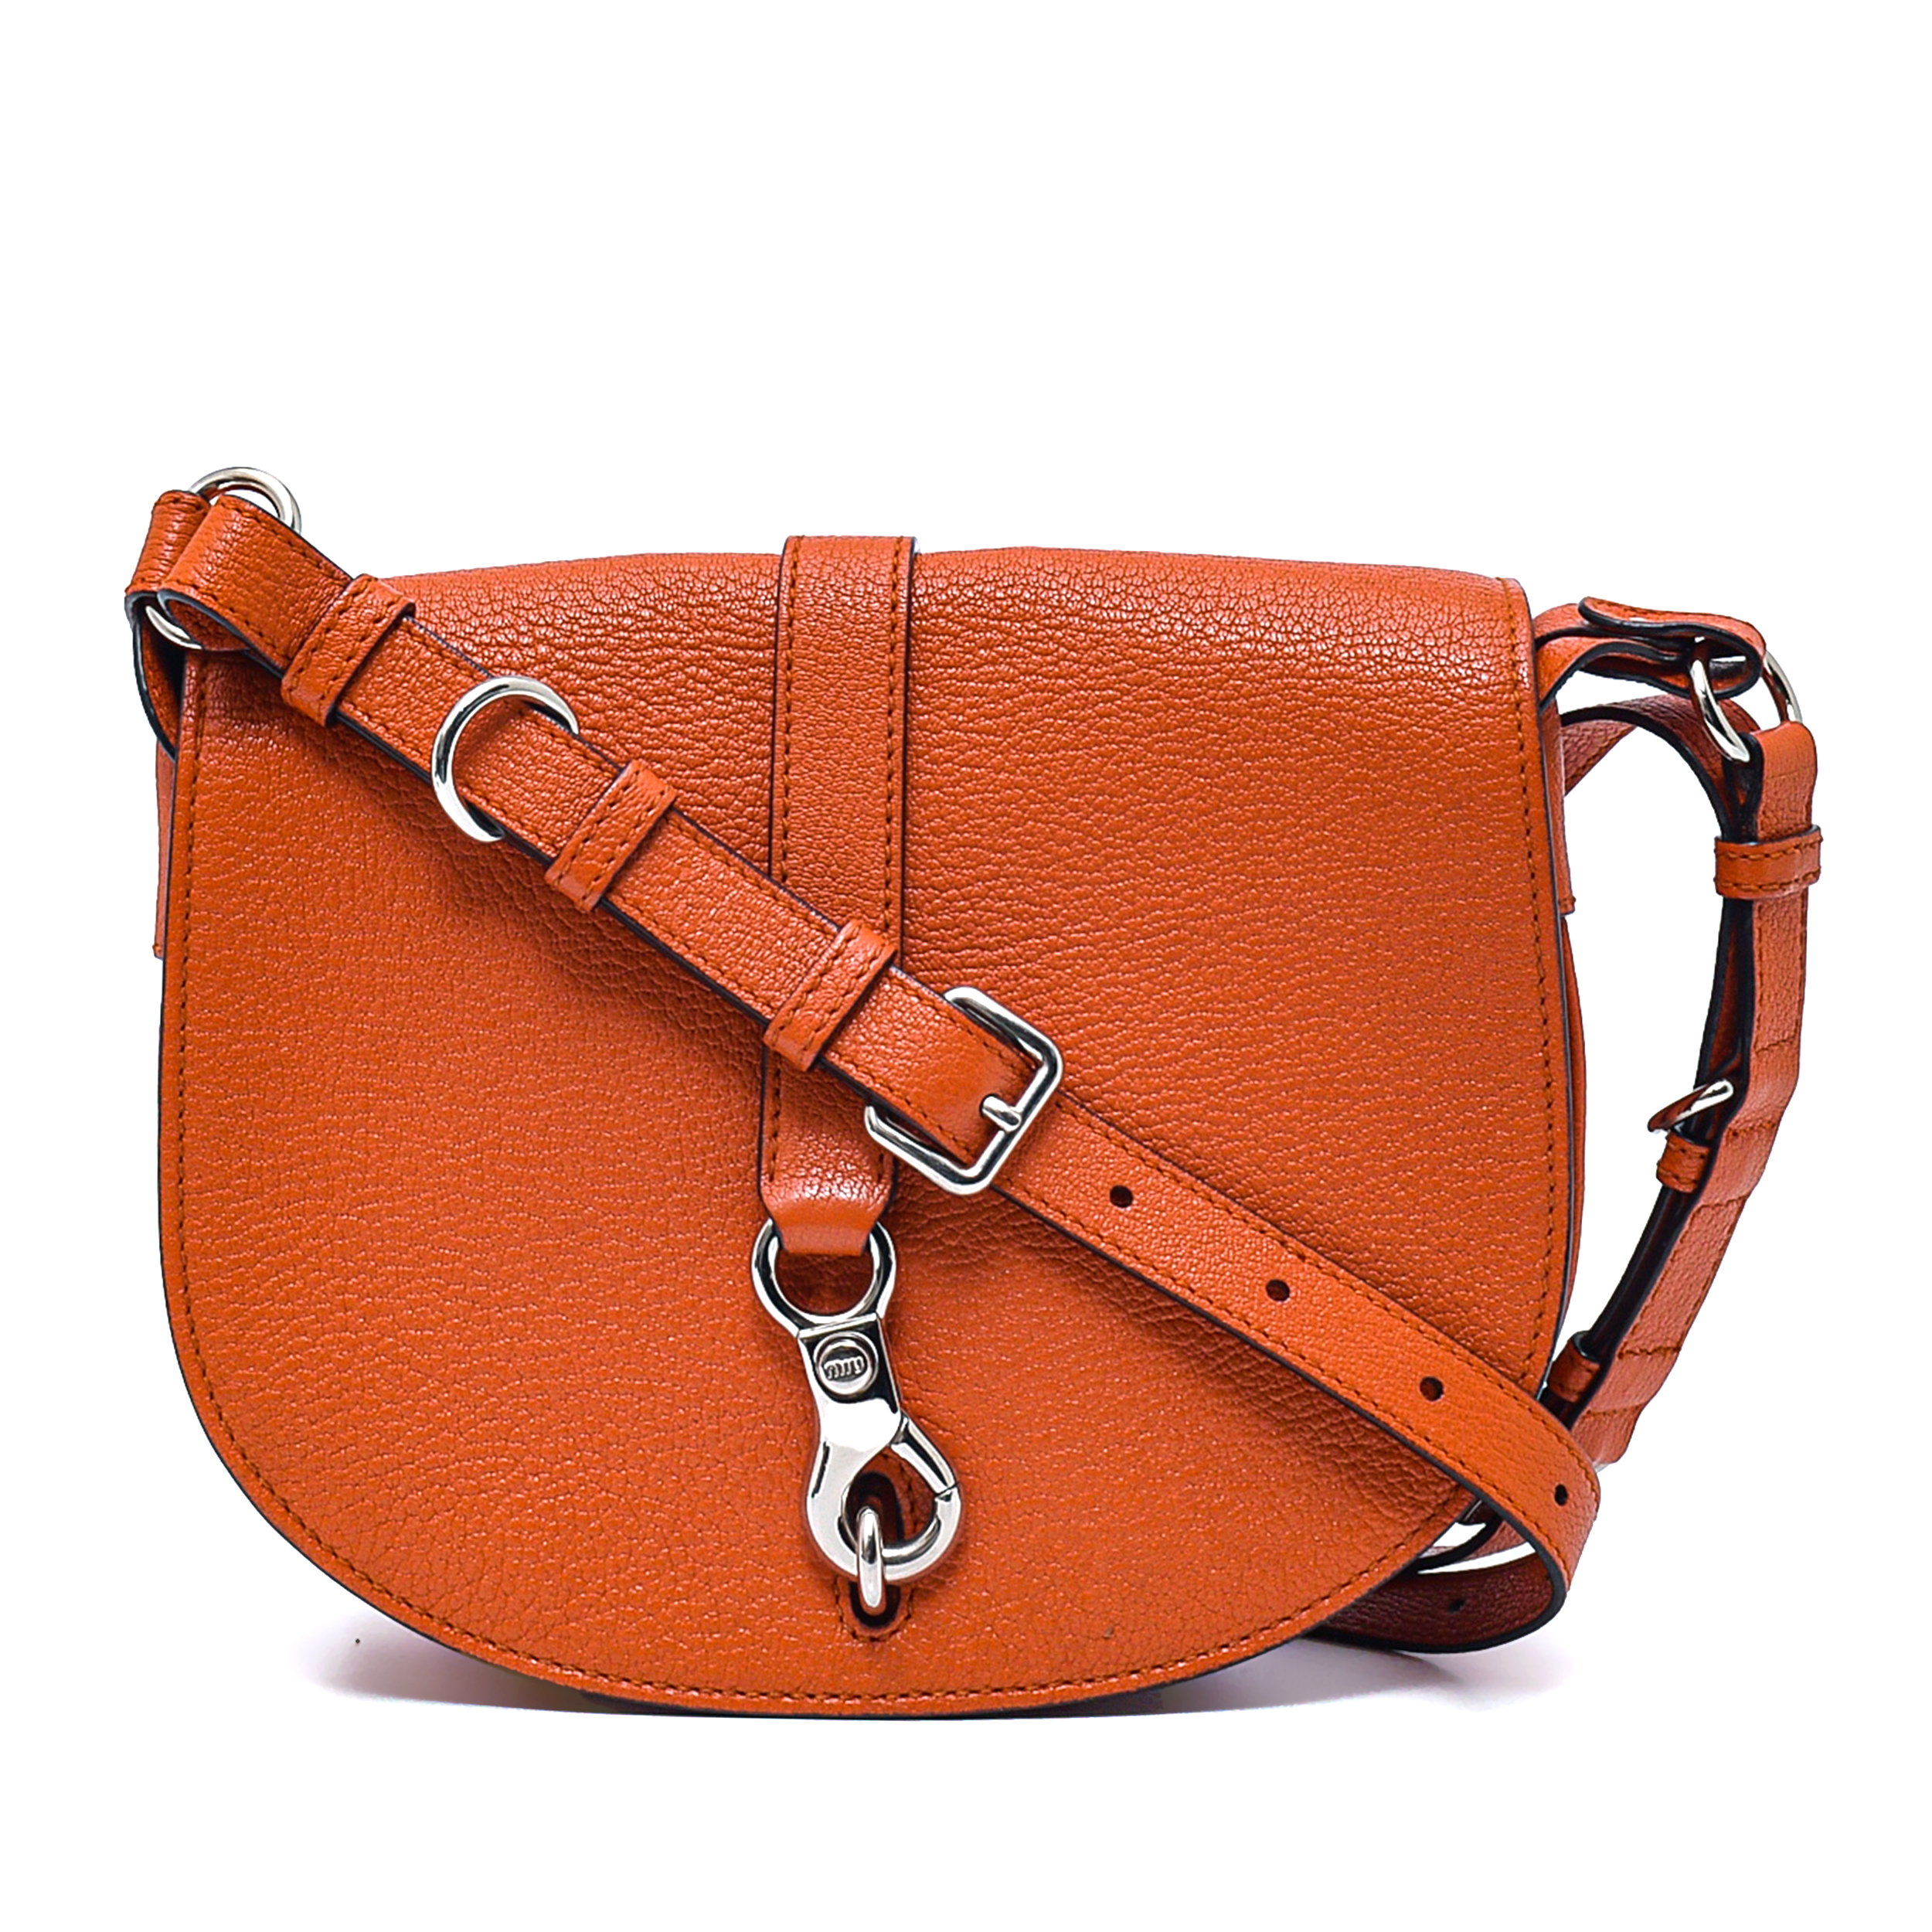 Miu Miu - Orange Leather Madras Crossbody Bag